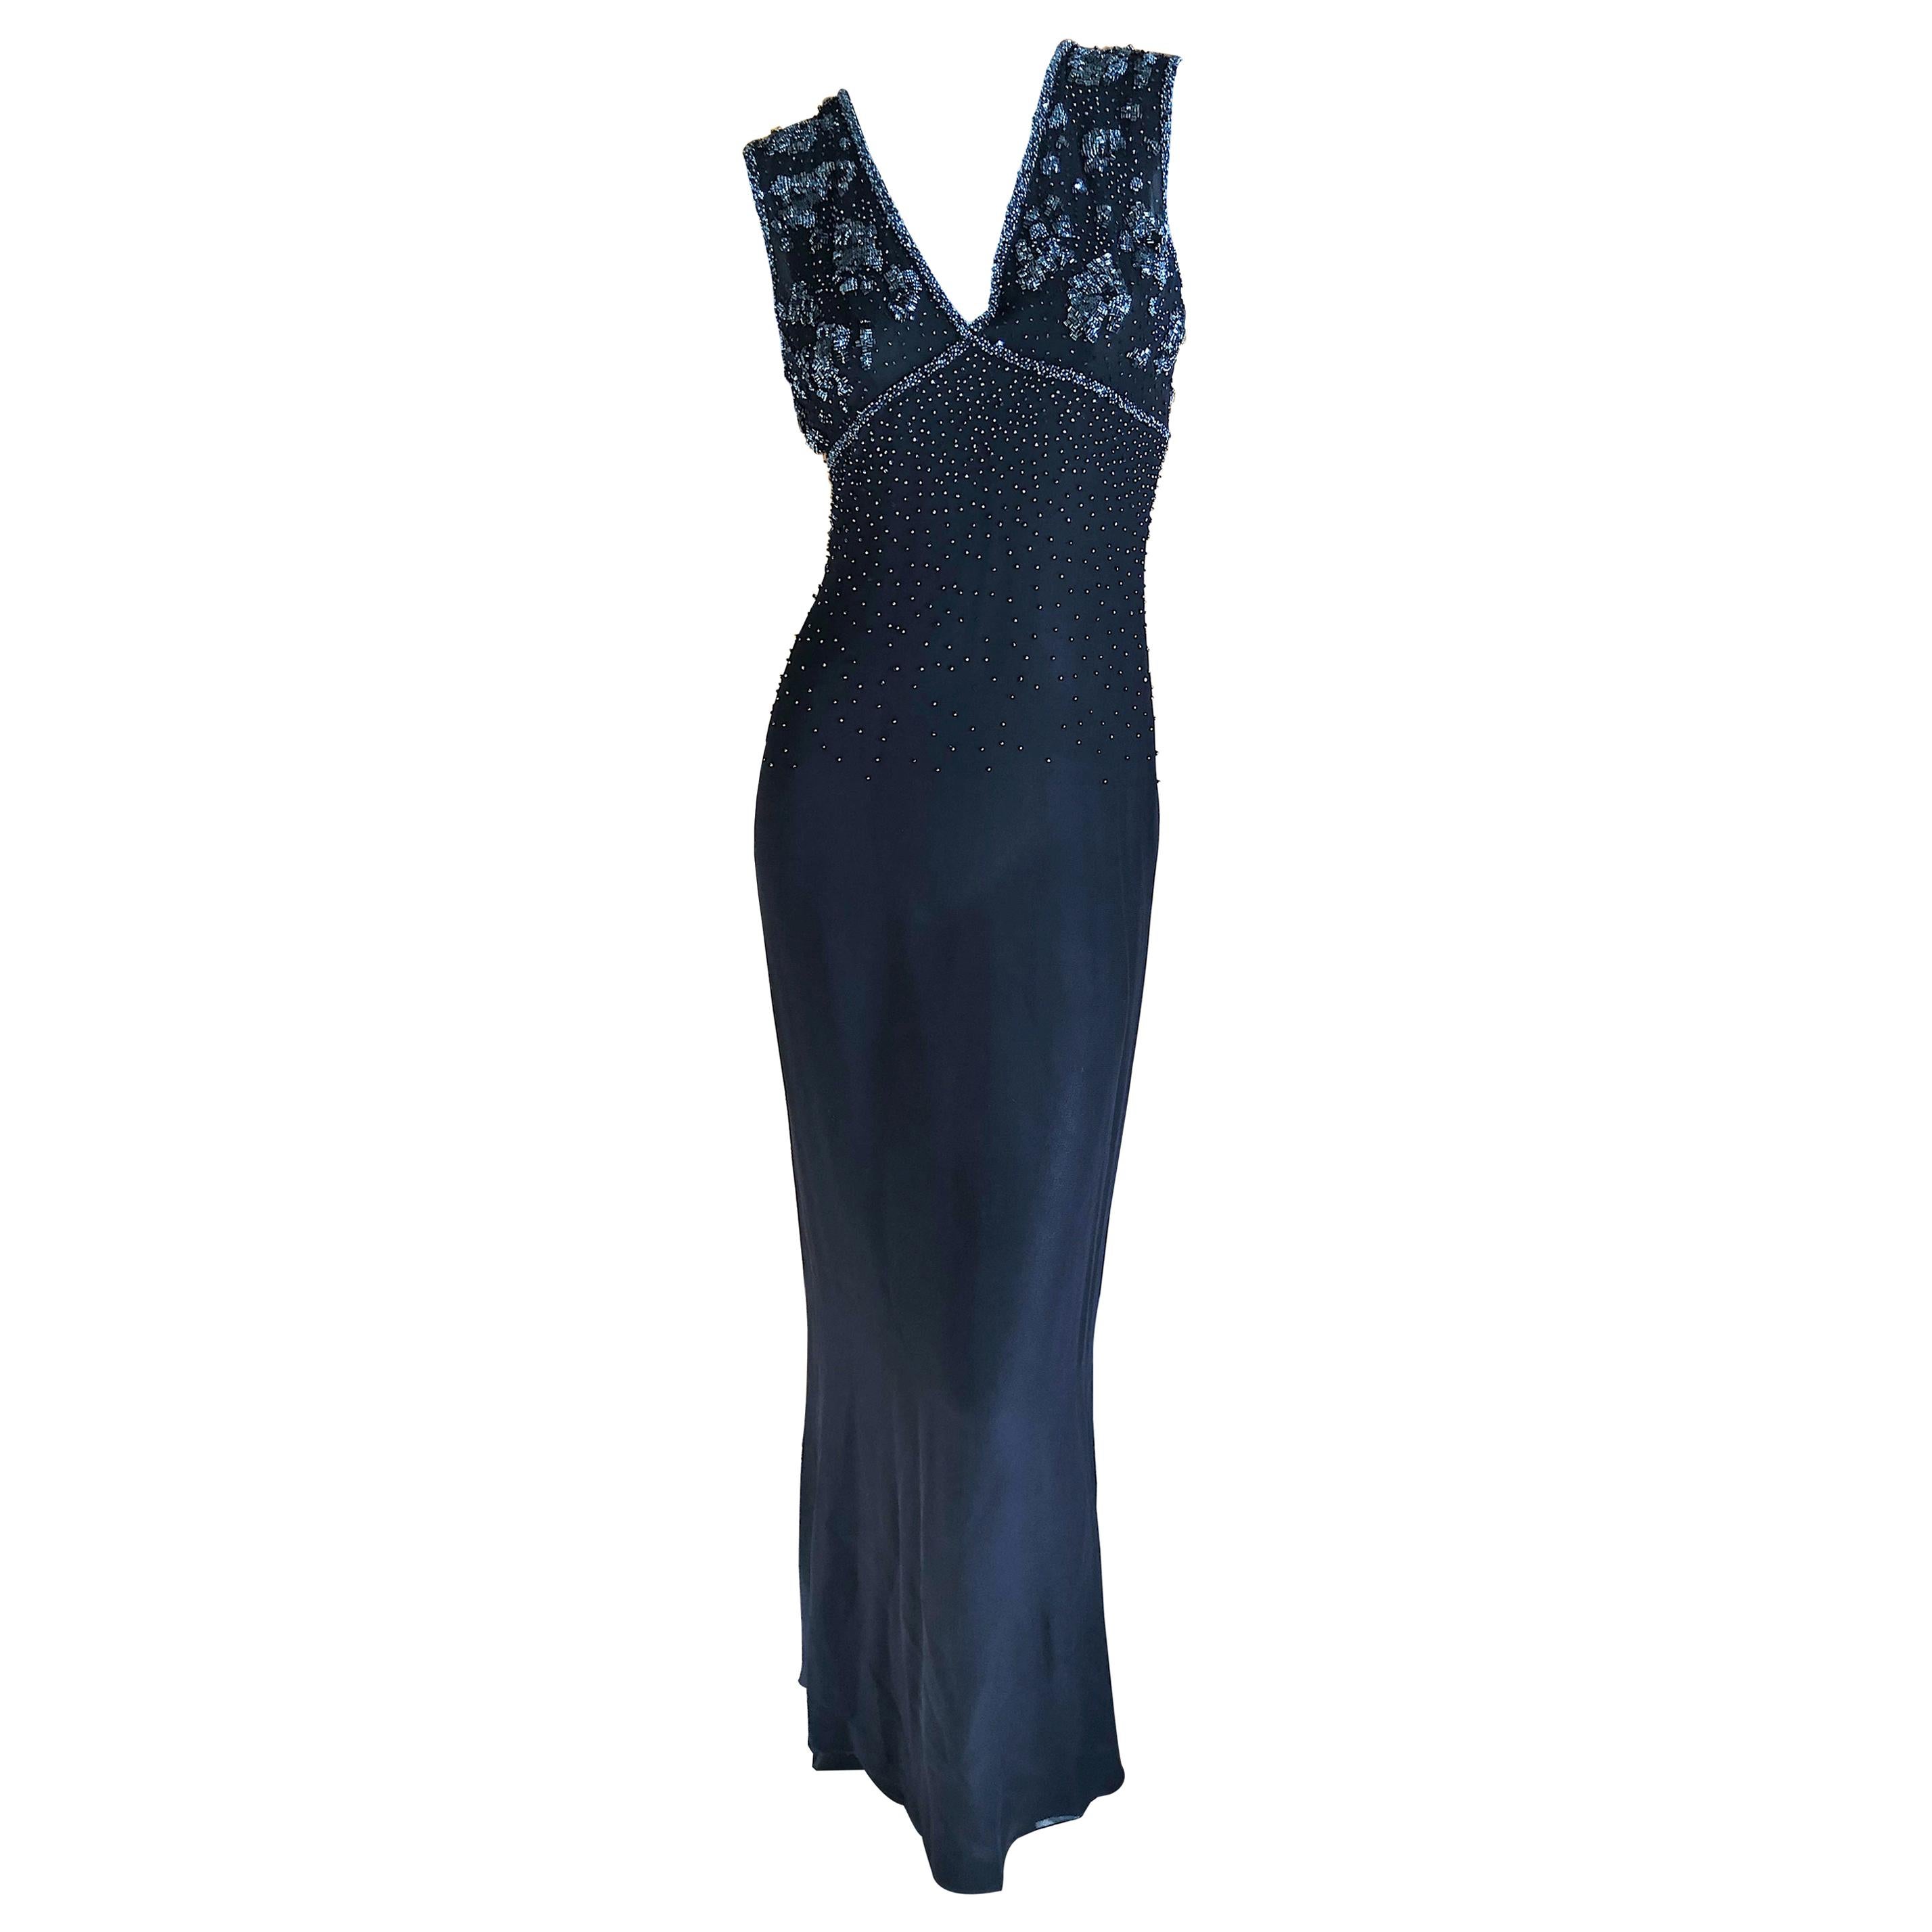 Emanuel Ungaro Parallel Vintage Black Evening Dress w Hematite Seed Bead Details For Sale